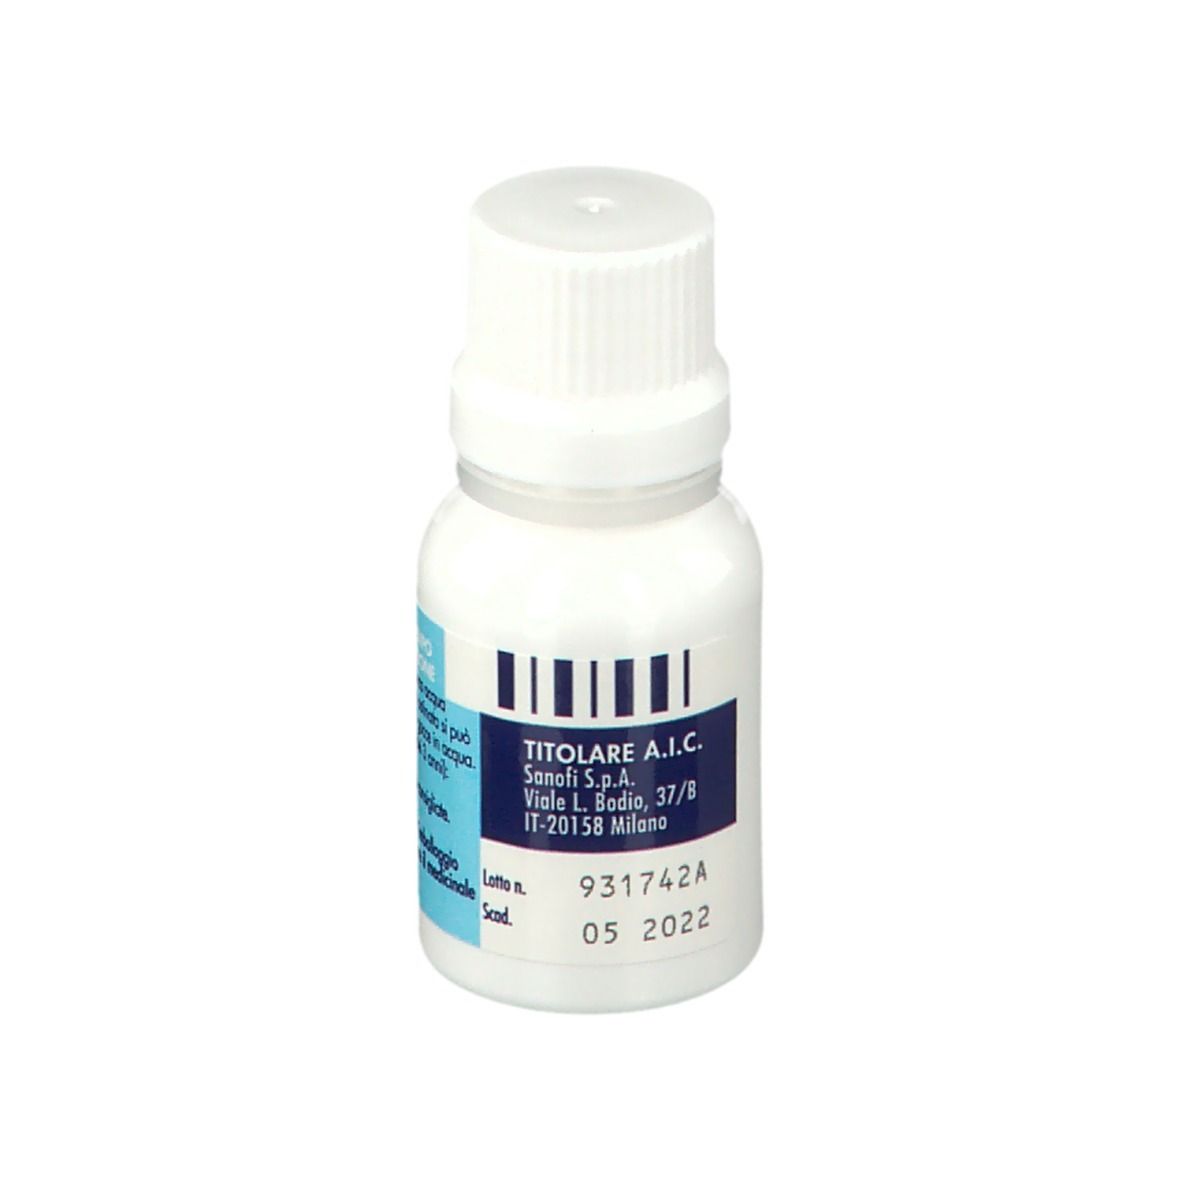 Guttalax® 7,5 mg/ml Gocce orali